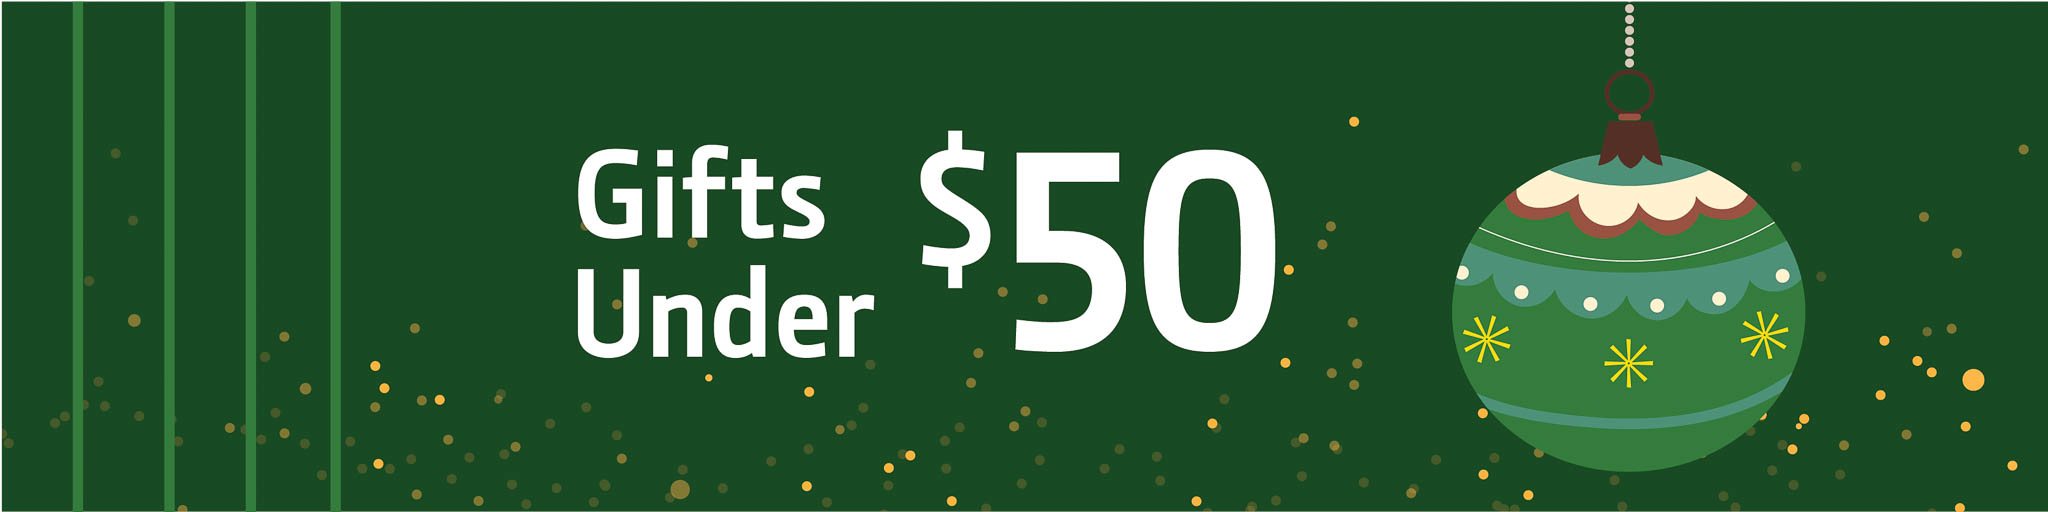 John Deere Gifts Under $50